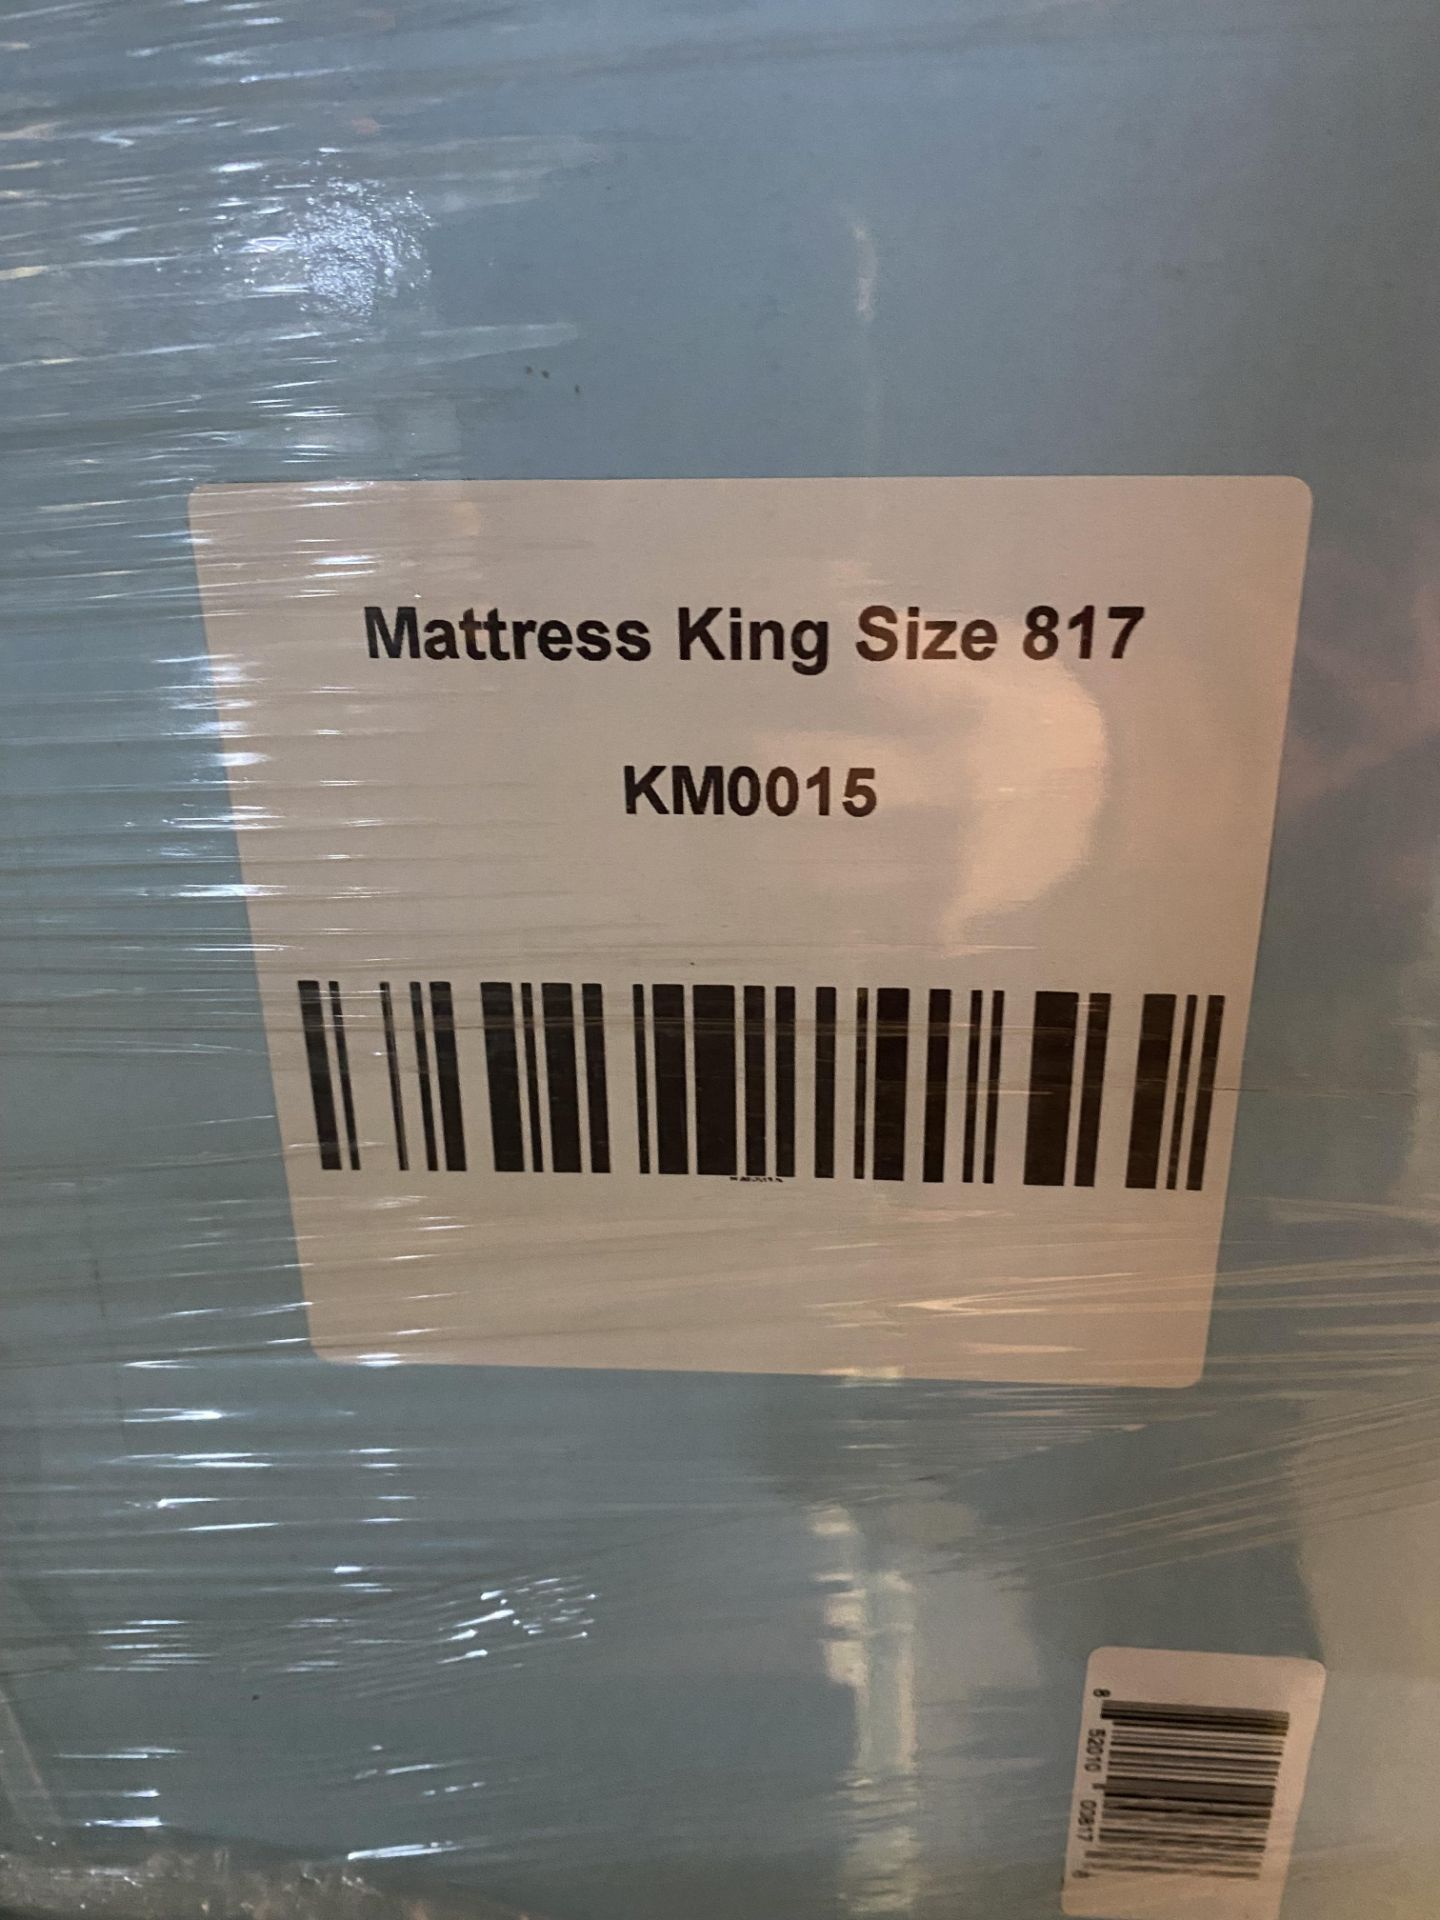 ComfaSleep KM0016 King Size 815 Mattress - Image 6 of 6